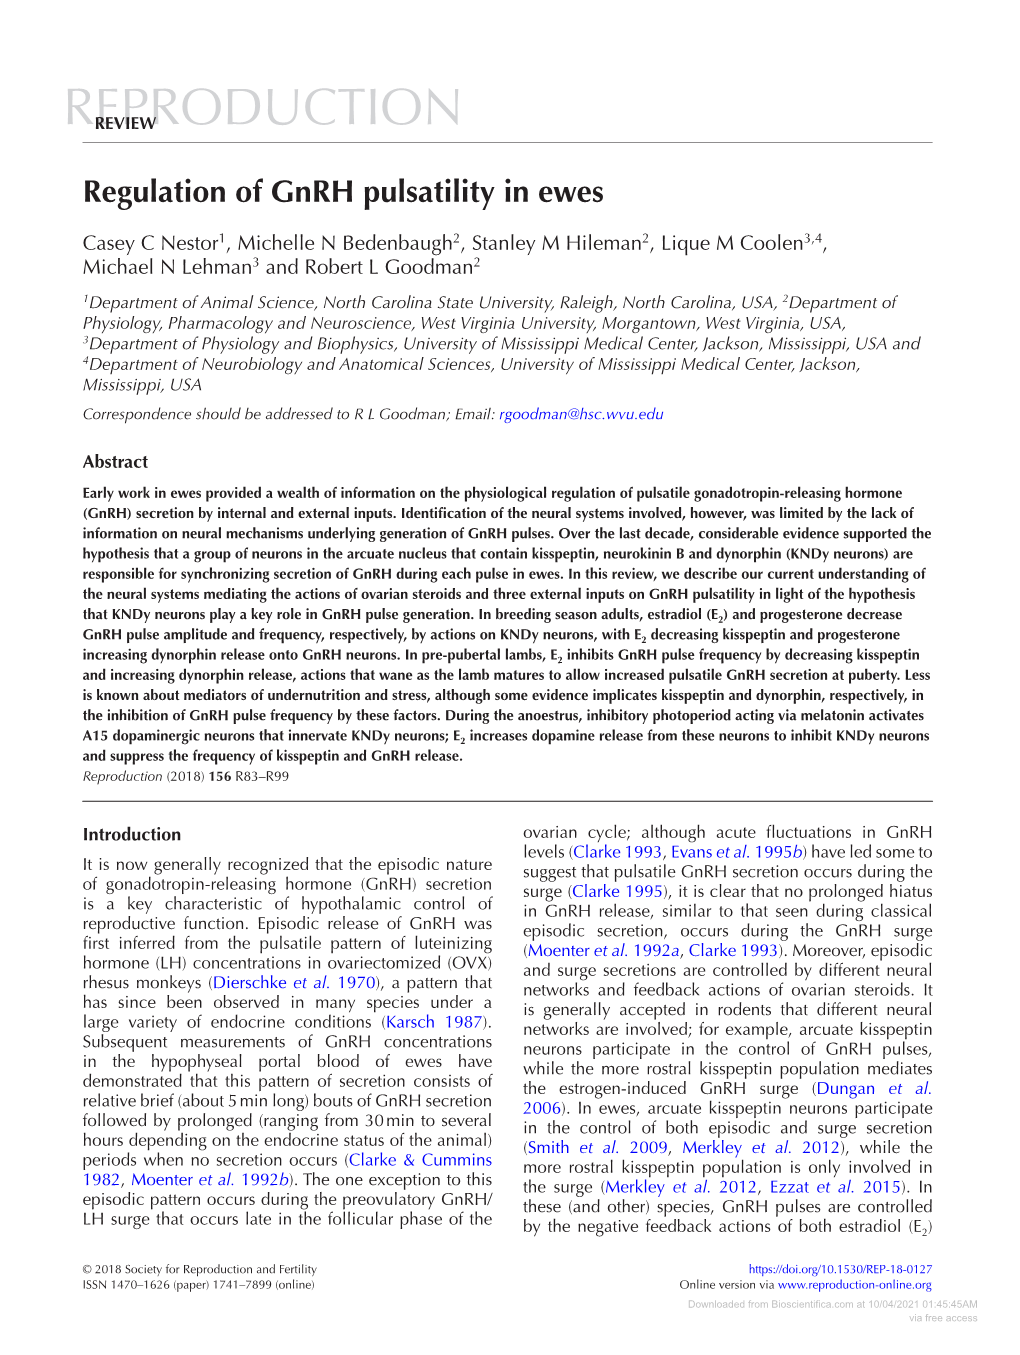 Regulation of Gnrh Pulsatility in Ewes